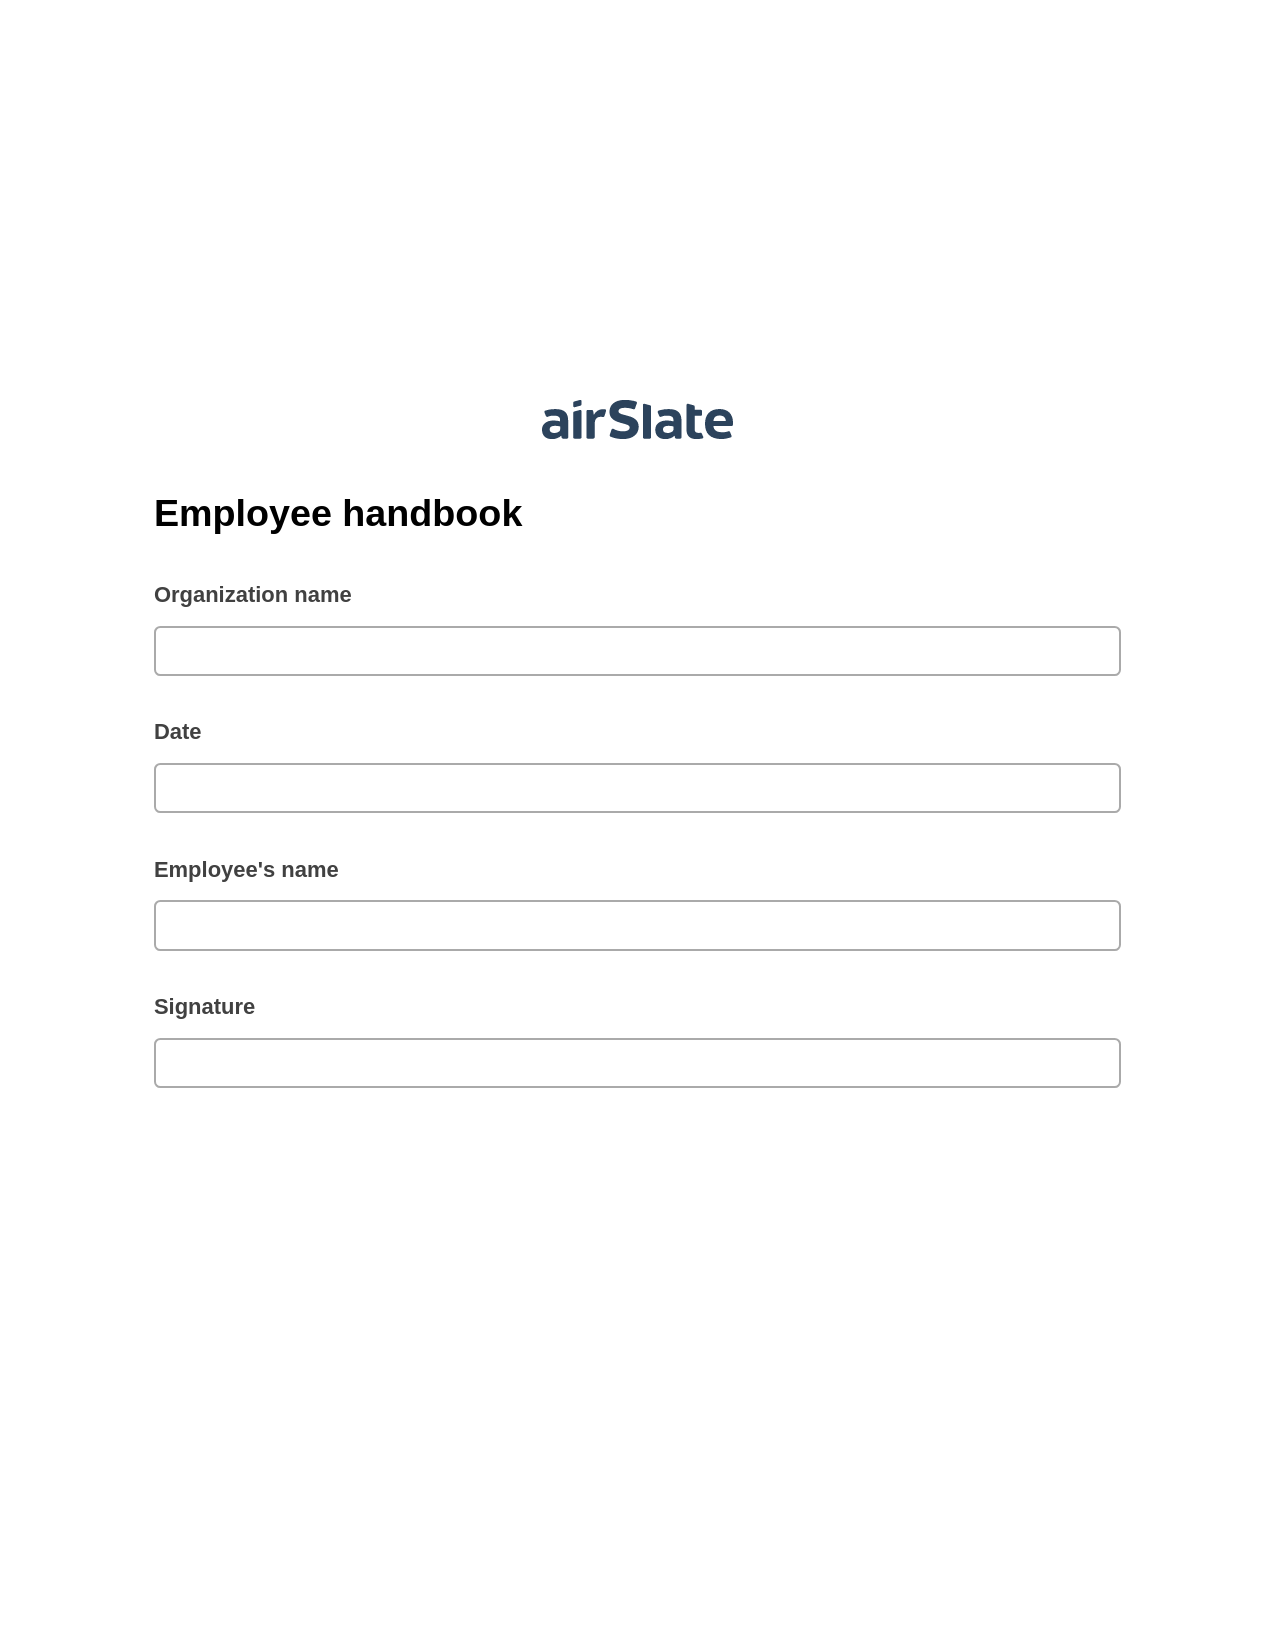 Employee handbook Pre-fill from NetSuite Records Bot, Text Message Notification Bot, Box Bot